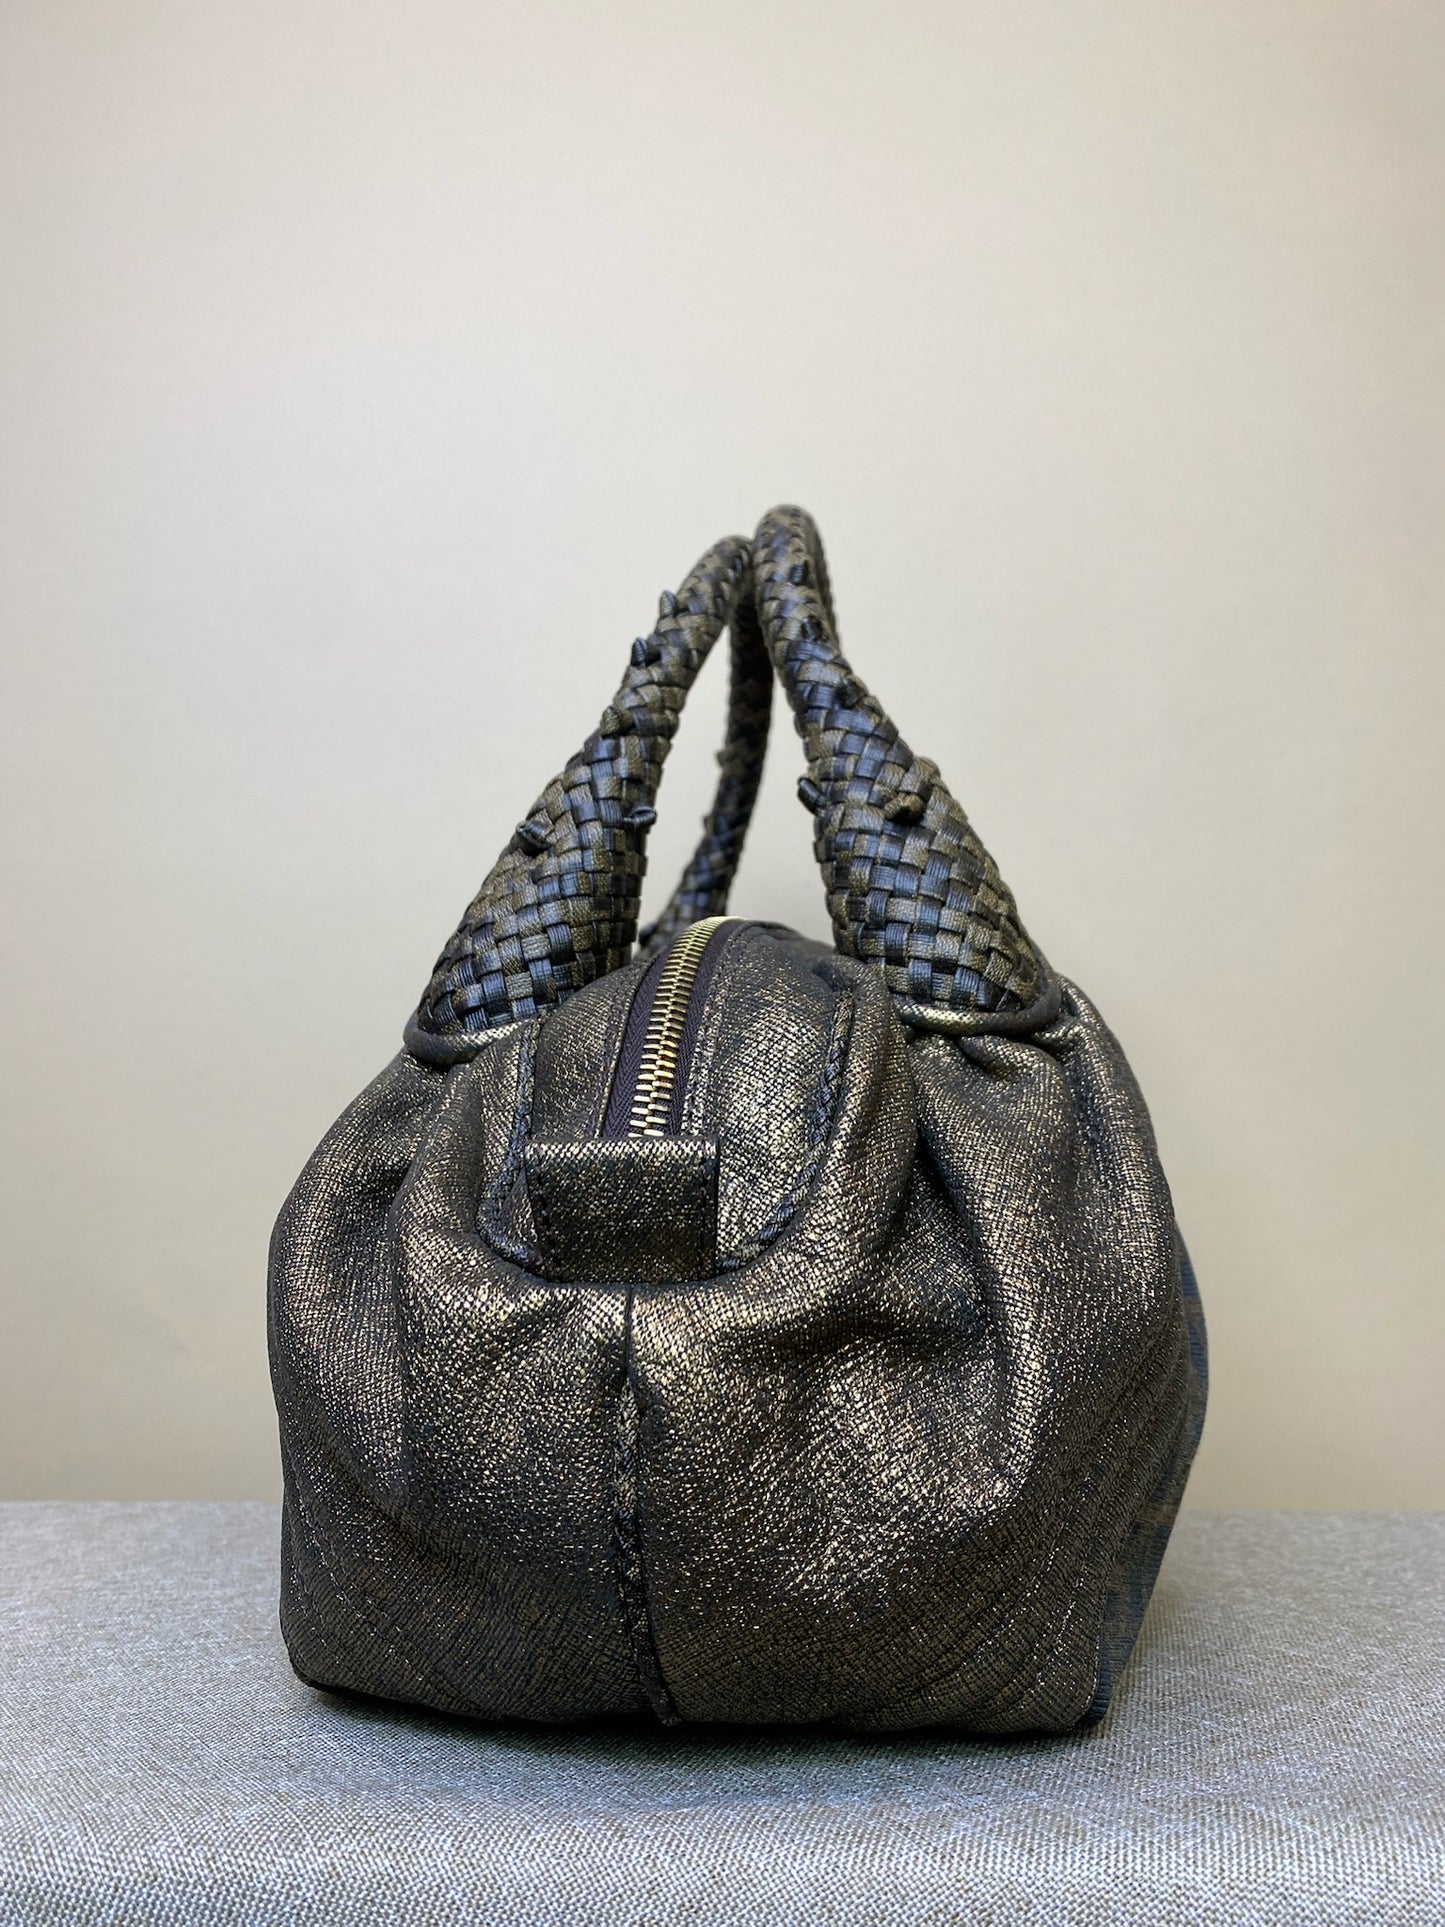 Fendi, Bauletto Spy Zucca Bronze handbag, 20